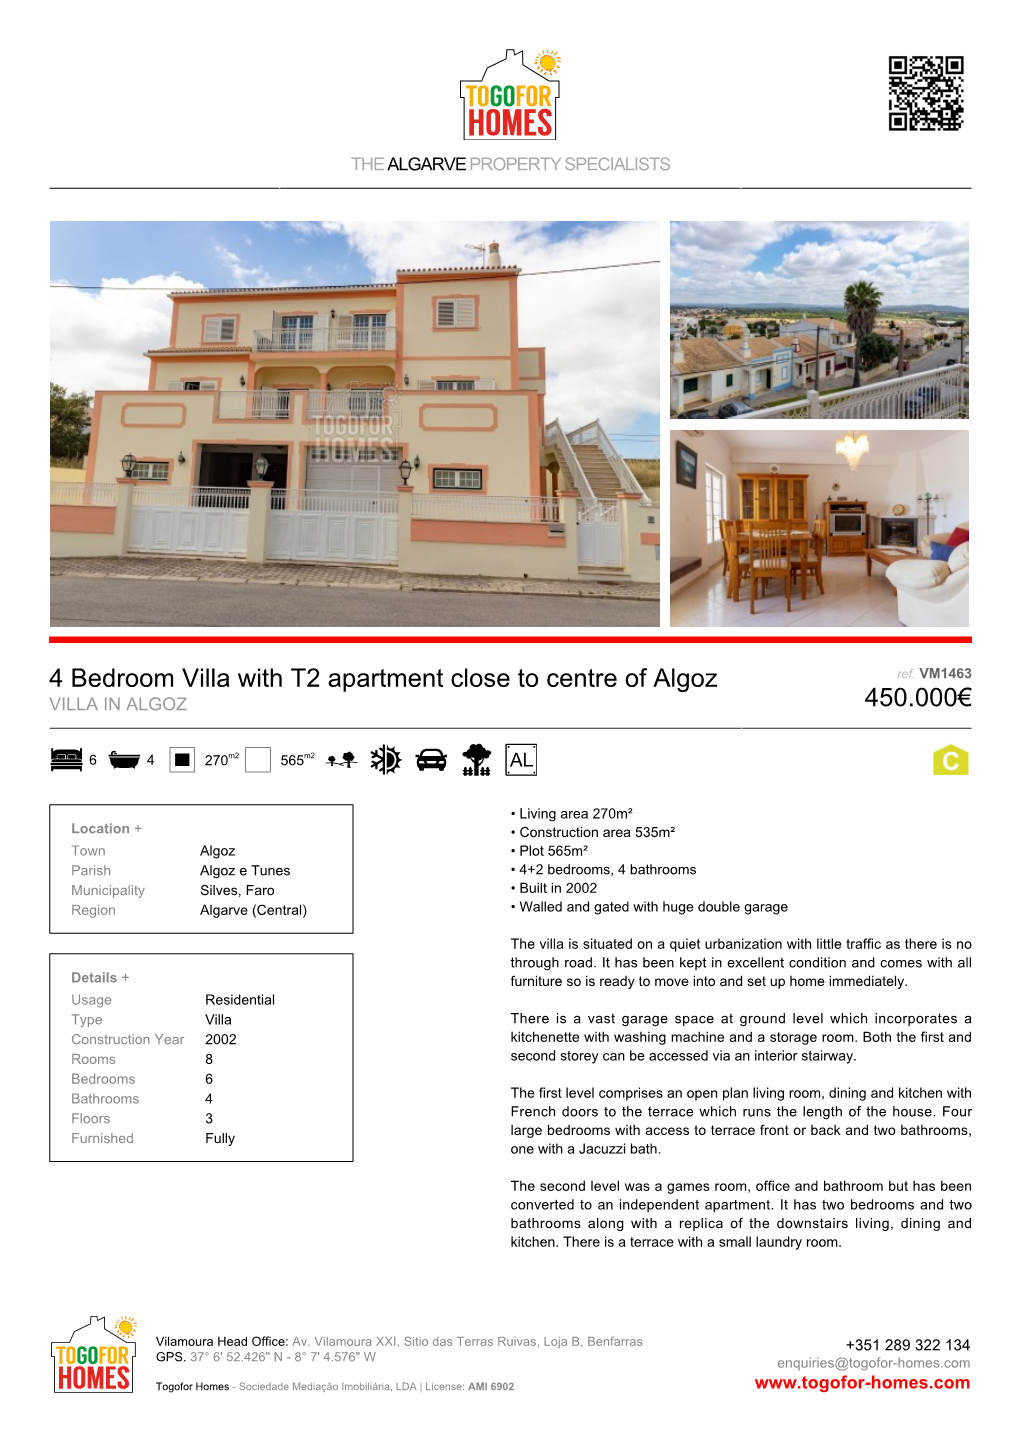 4 Bedroom Villa with T2 Apartment Close to Centre of Algoz 450.000€